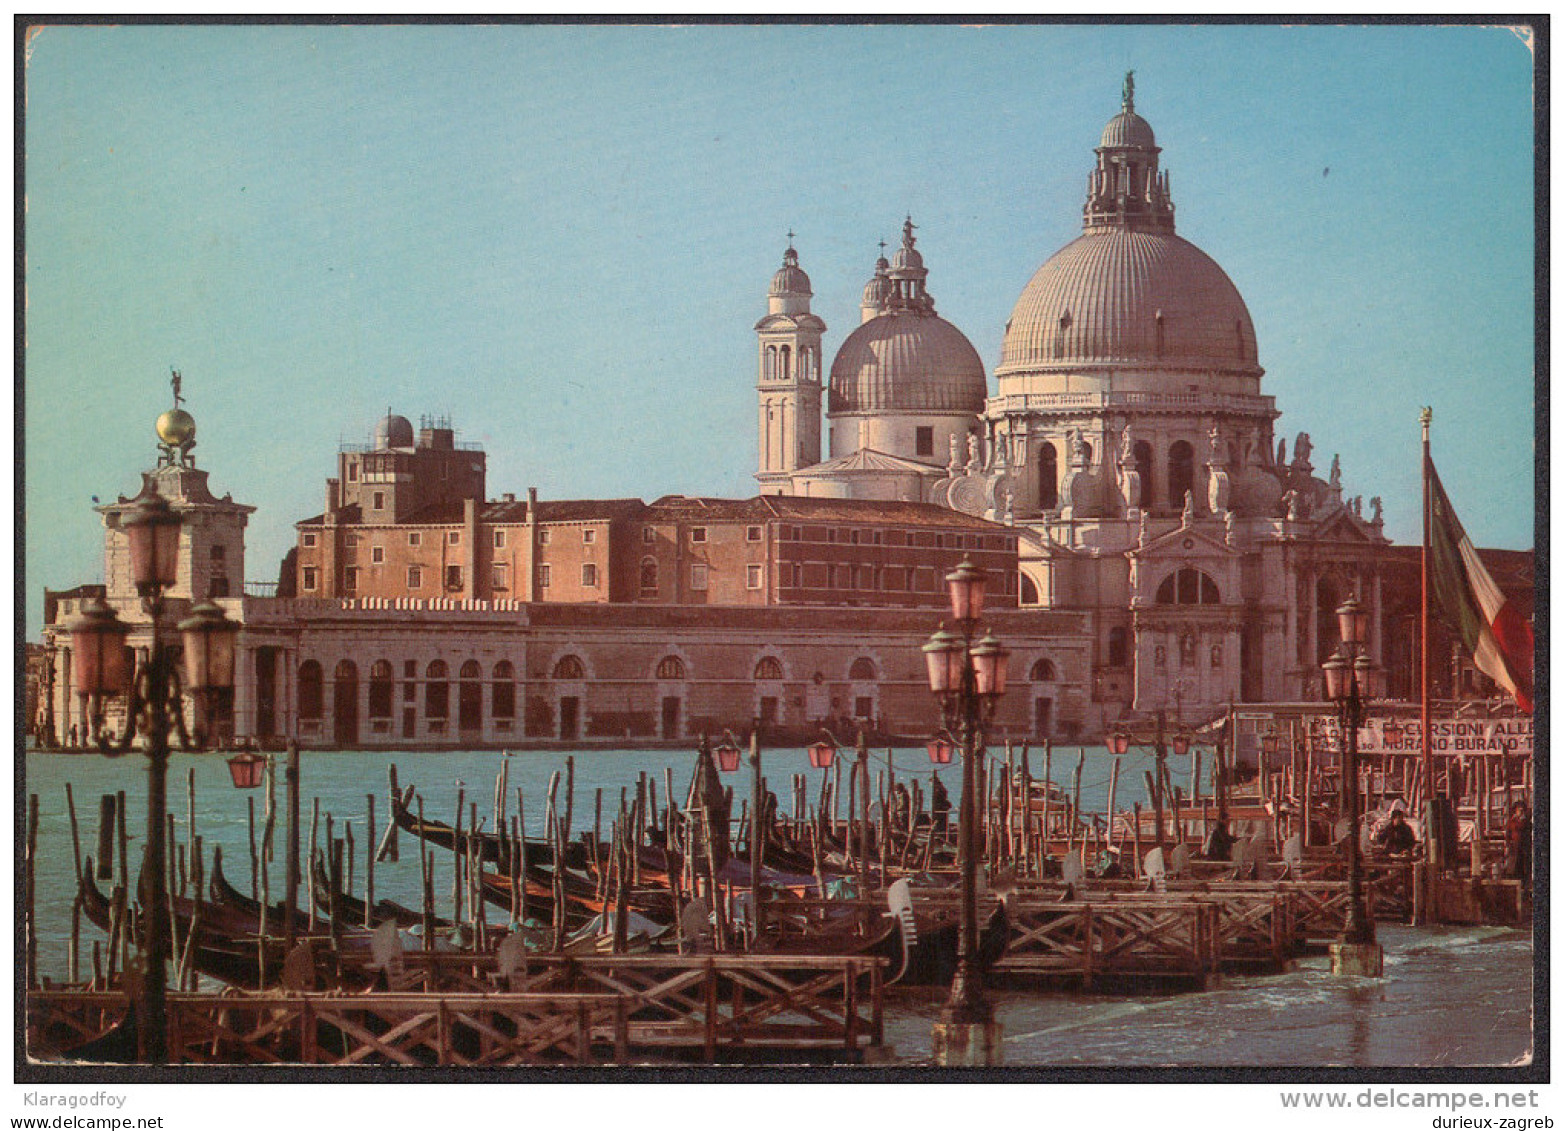 Venice old postcard travelled 197? bb